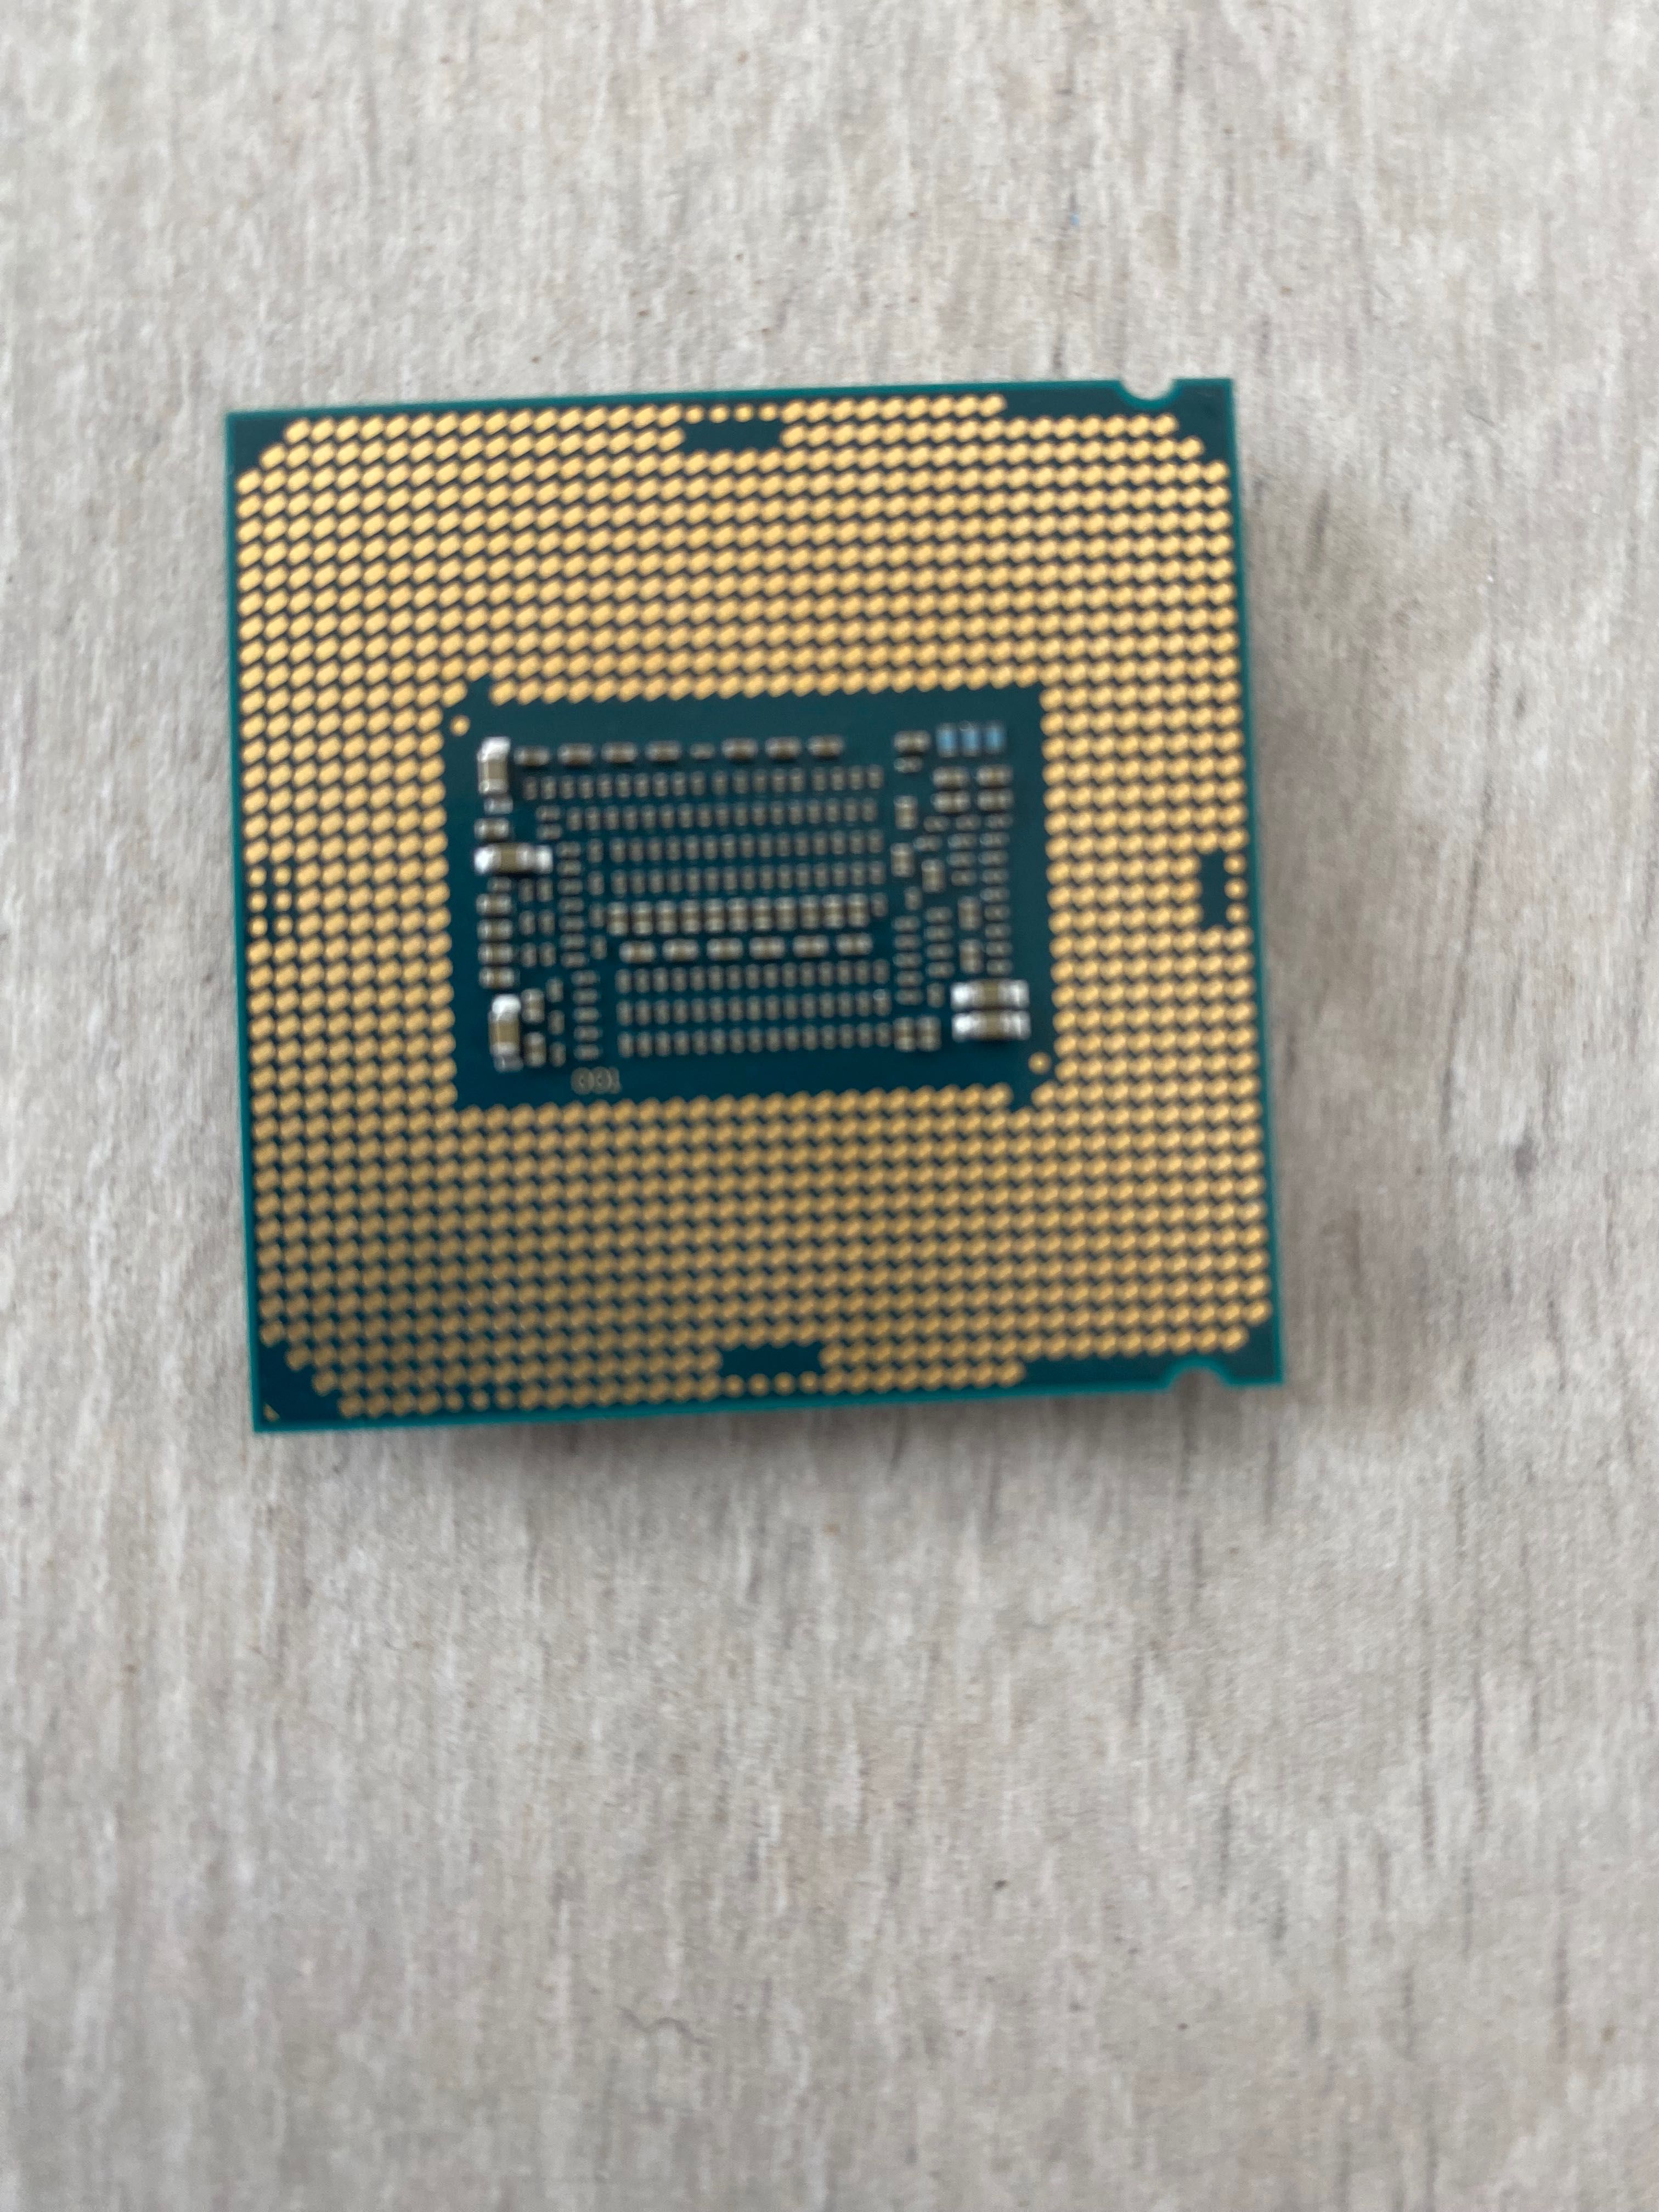 Procesor intel i5 9400f  + aqirys puck